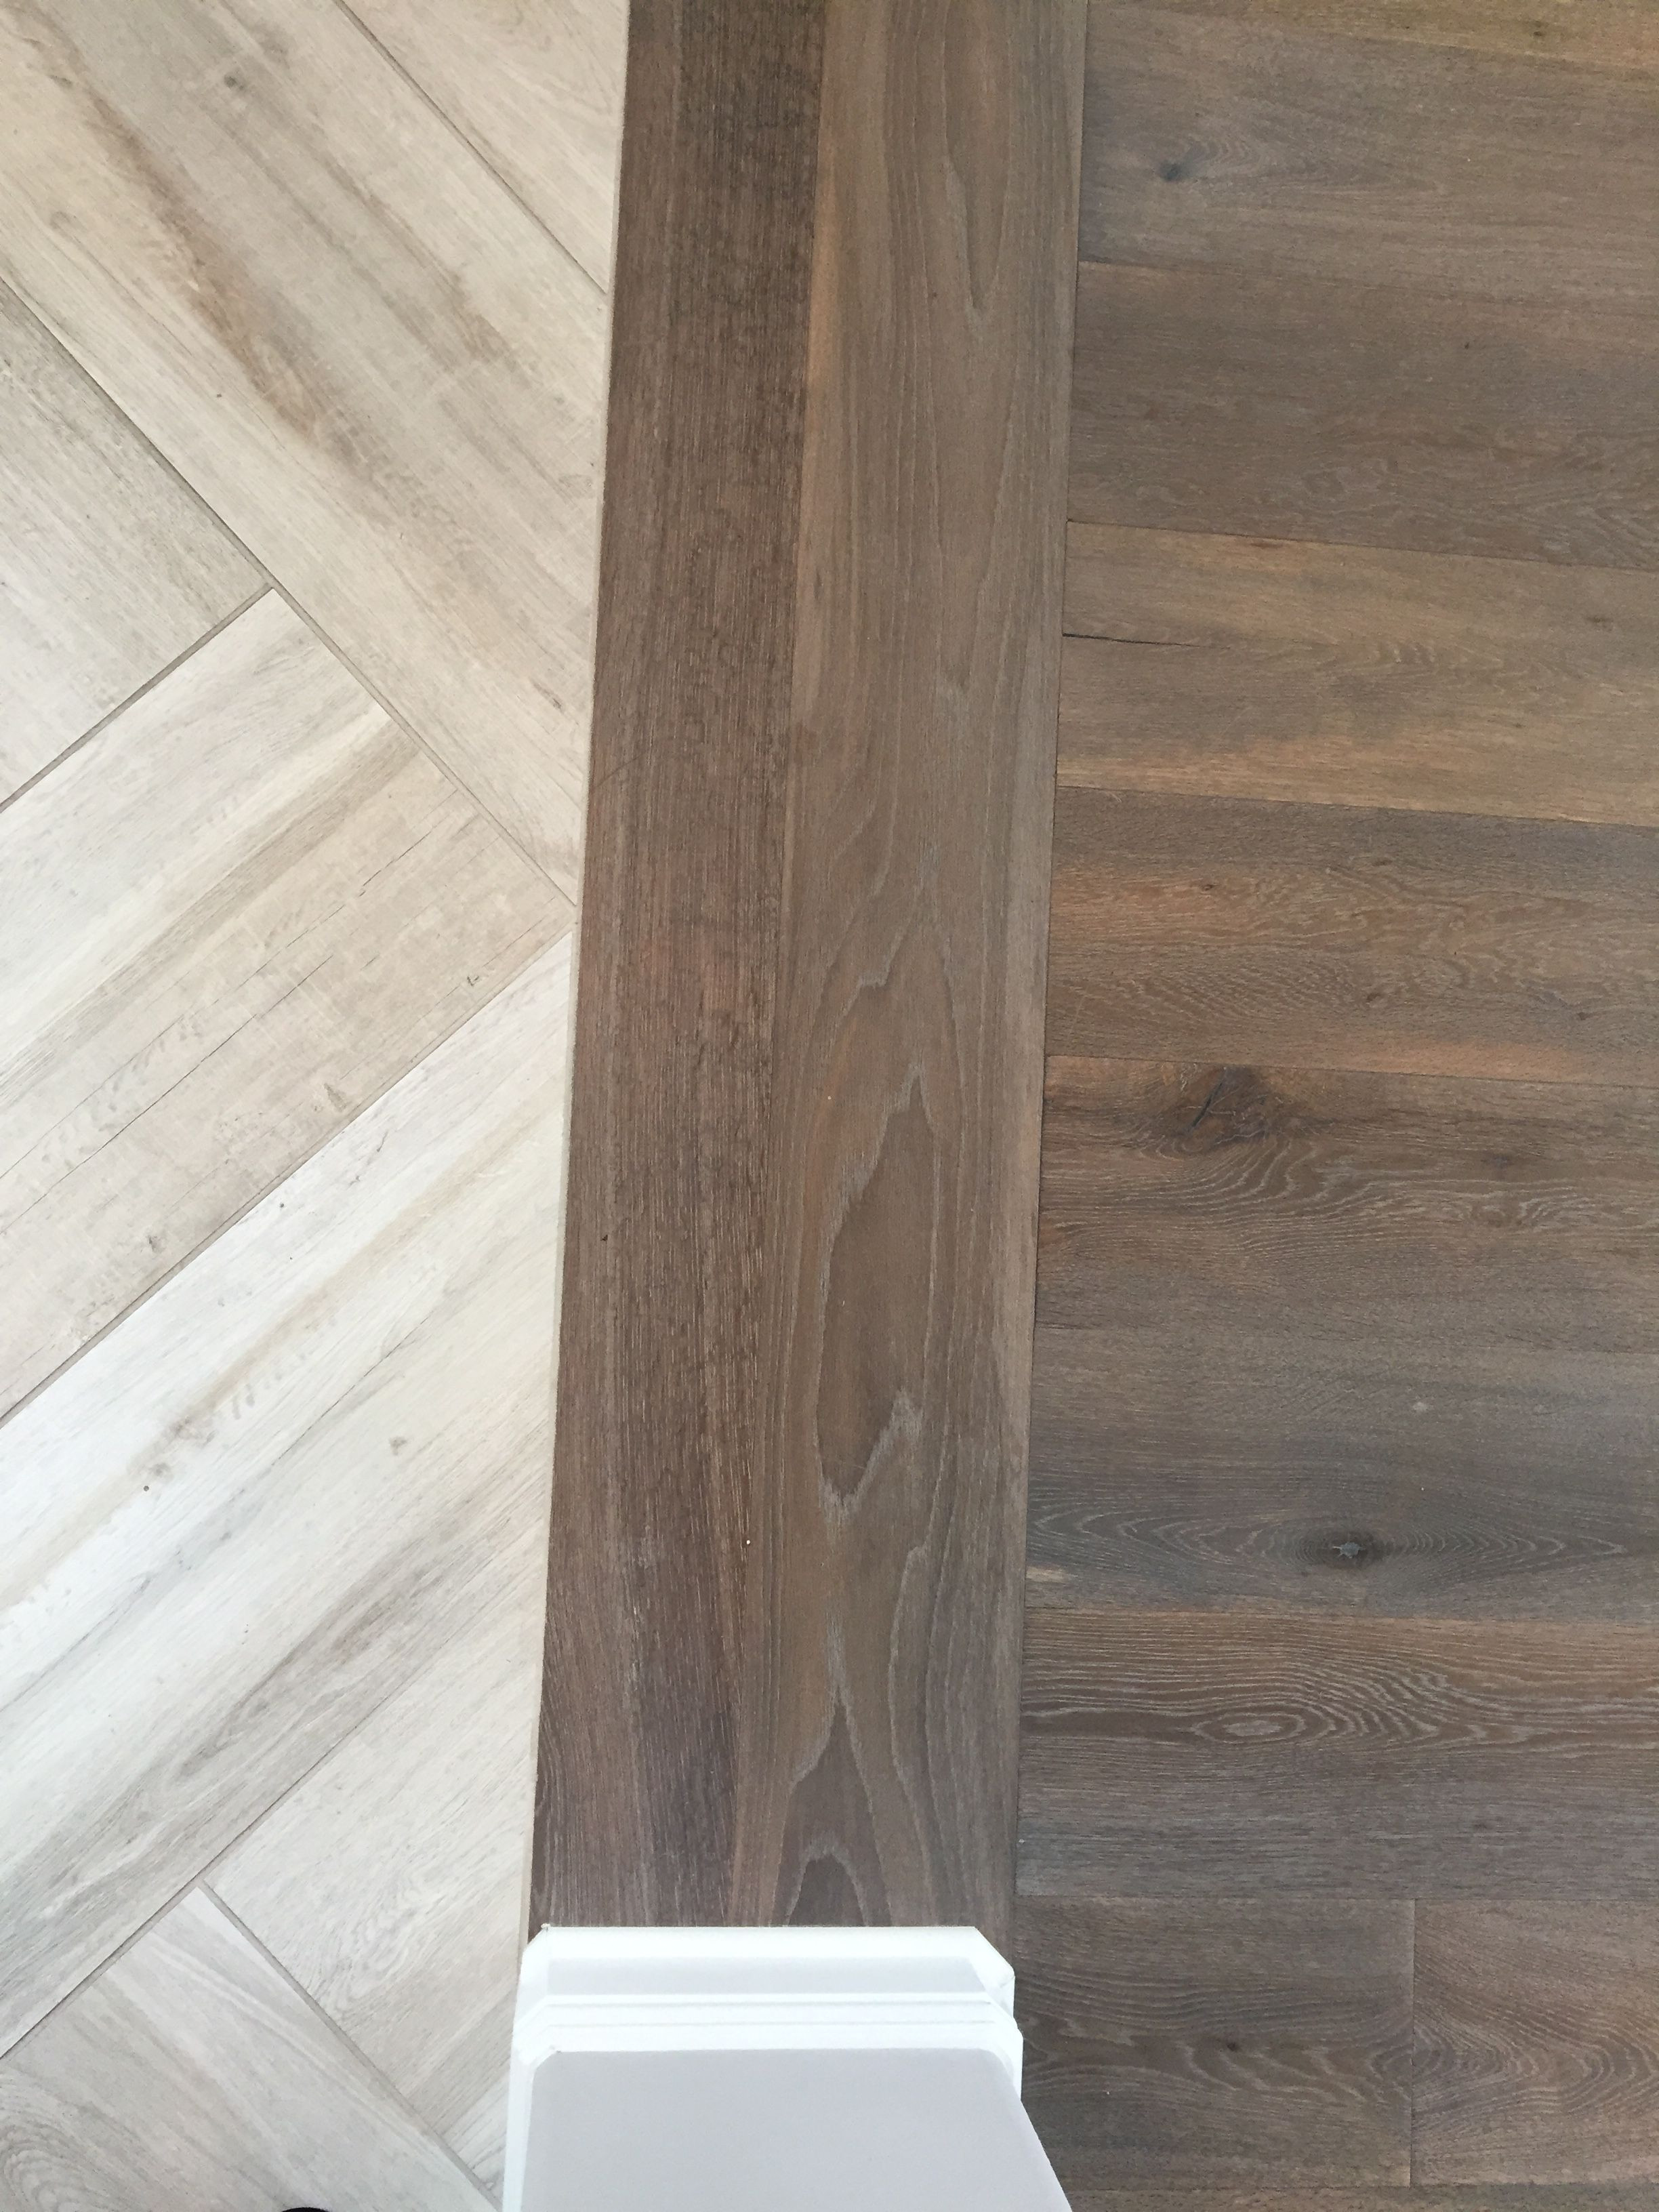 Hardwood Flooring Company London Of Floor Transition Laminate to Herringbone Tile Pattern Model Pertaining to Floor Transition Laminate to Herringbone Tile Pattern